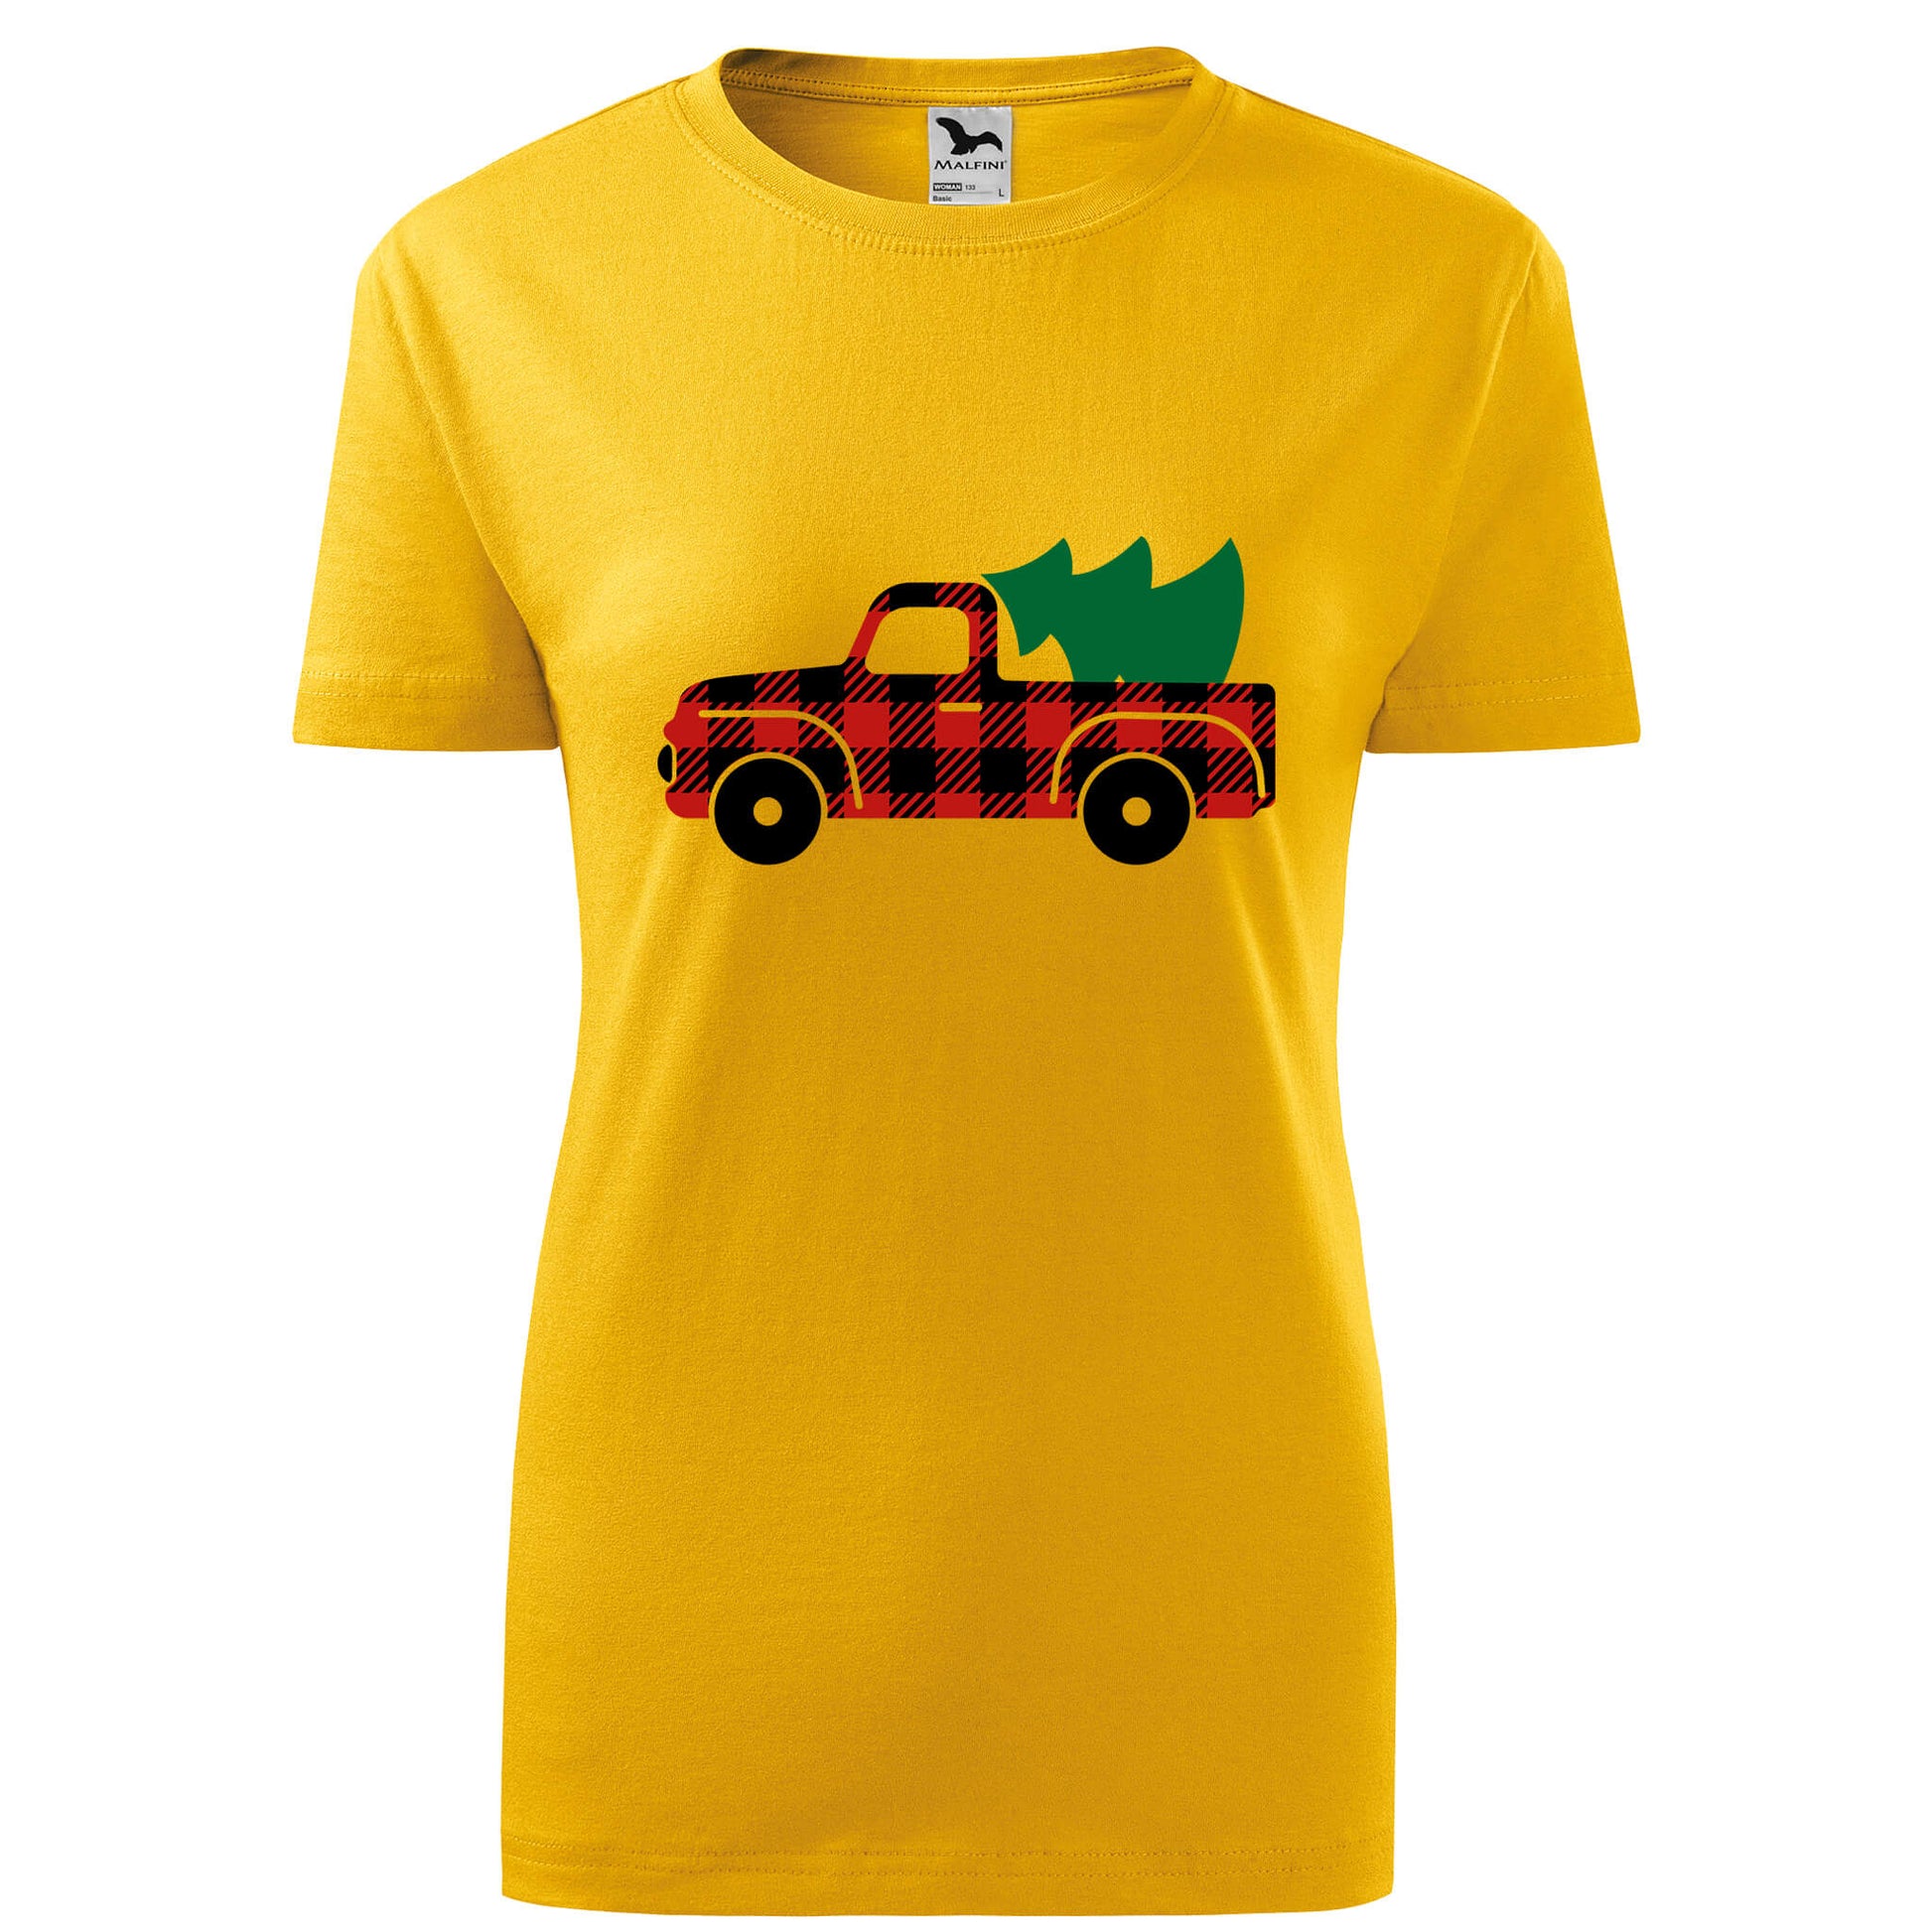 Christmas buffalo plaid truck t-shirt - rvdesignprint